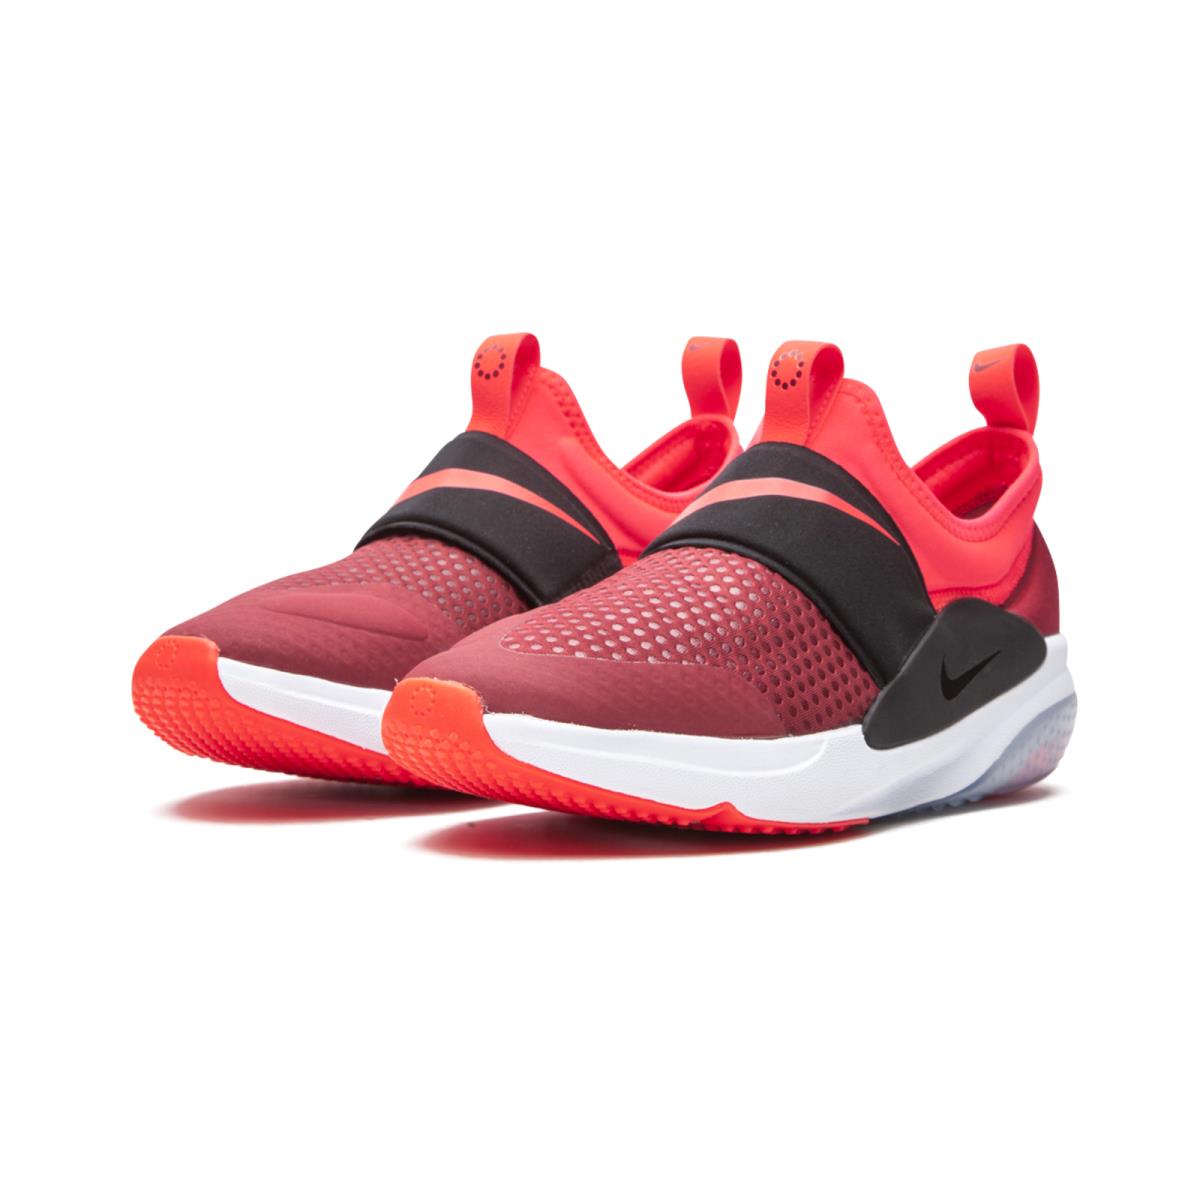 Nike shoes Joyride Nova - Team Red/Red Orbit-Black 2